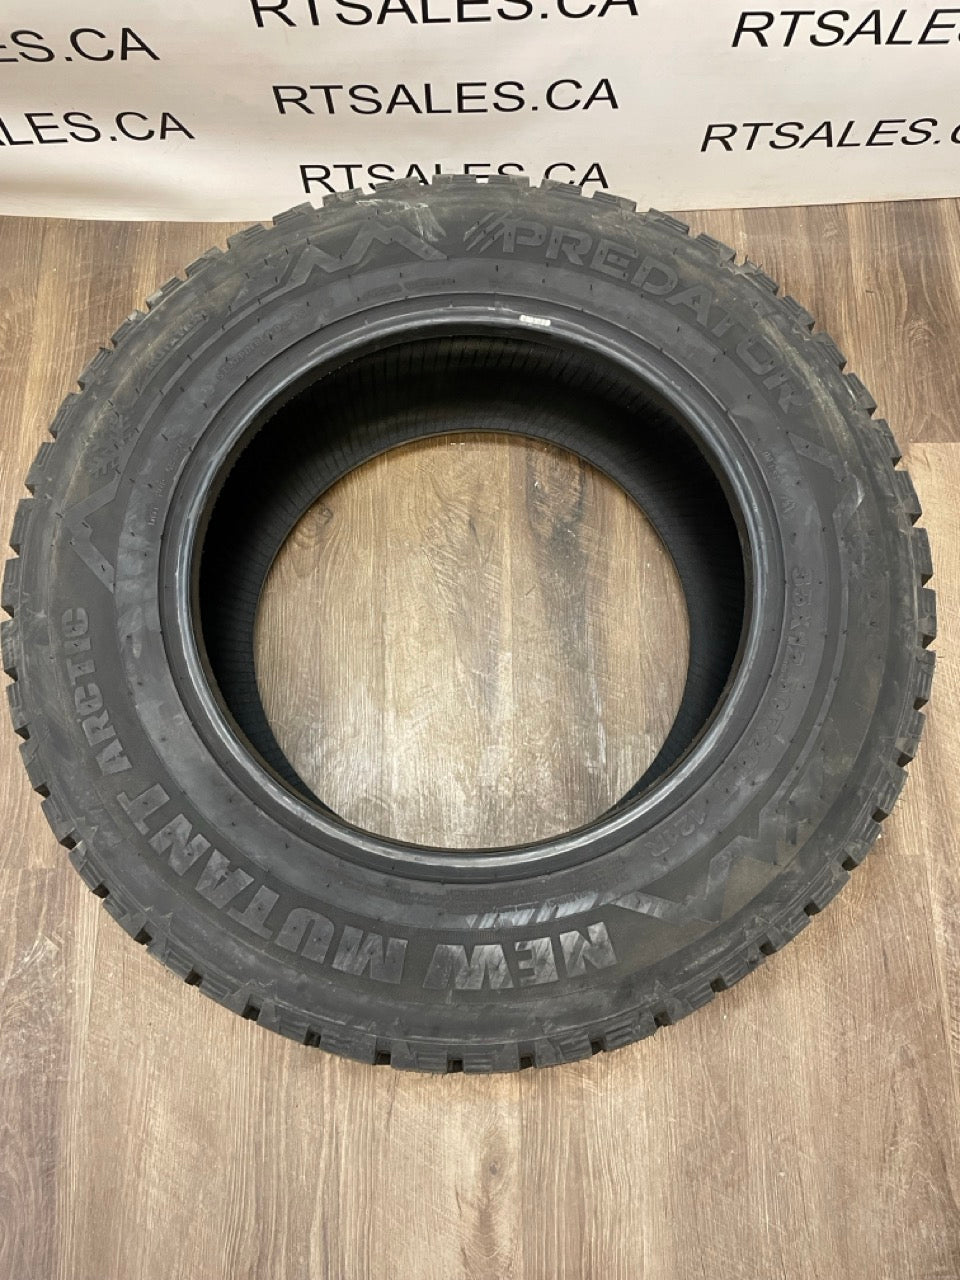 33x12.5x20 Predator NEW MUTANT ARCTIC E Winter tires